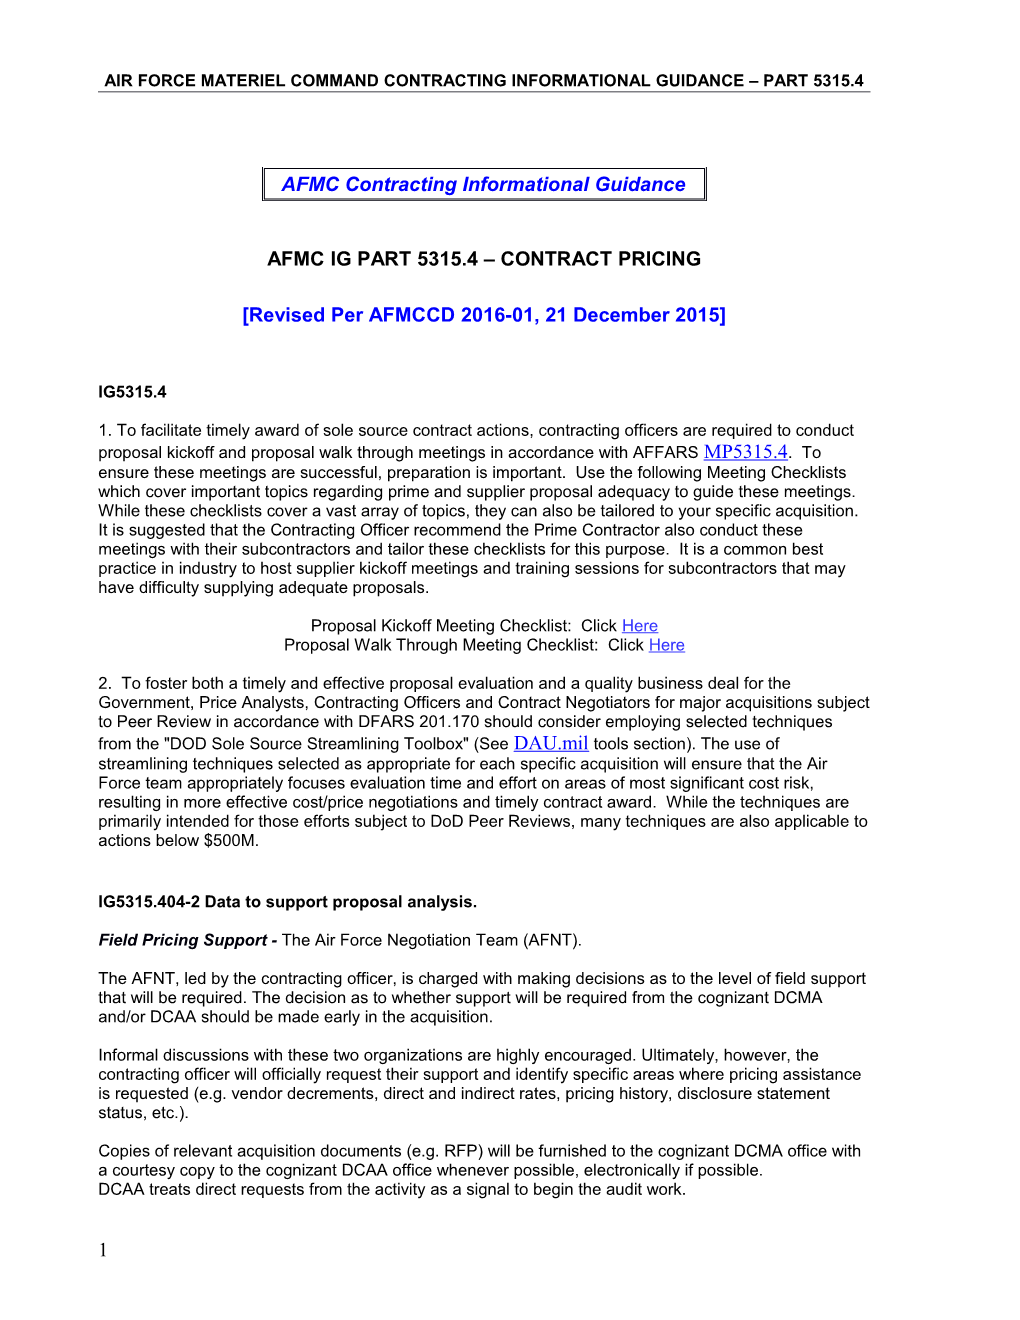 Air Force Materiel Command Informational Guidance Part 5315.4